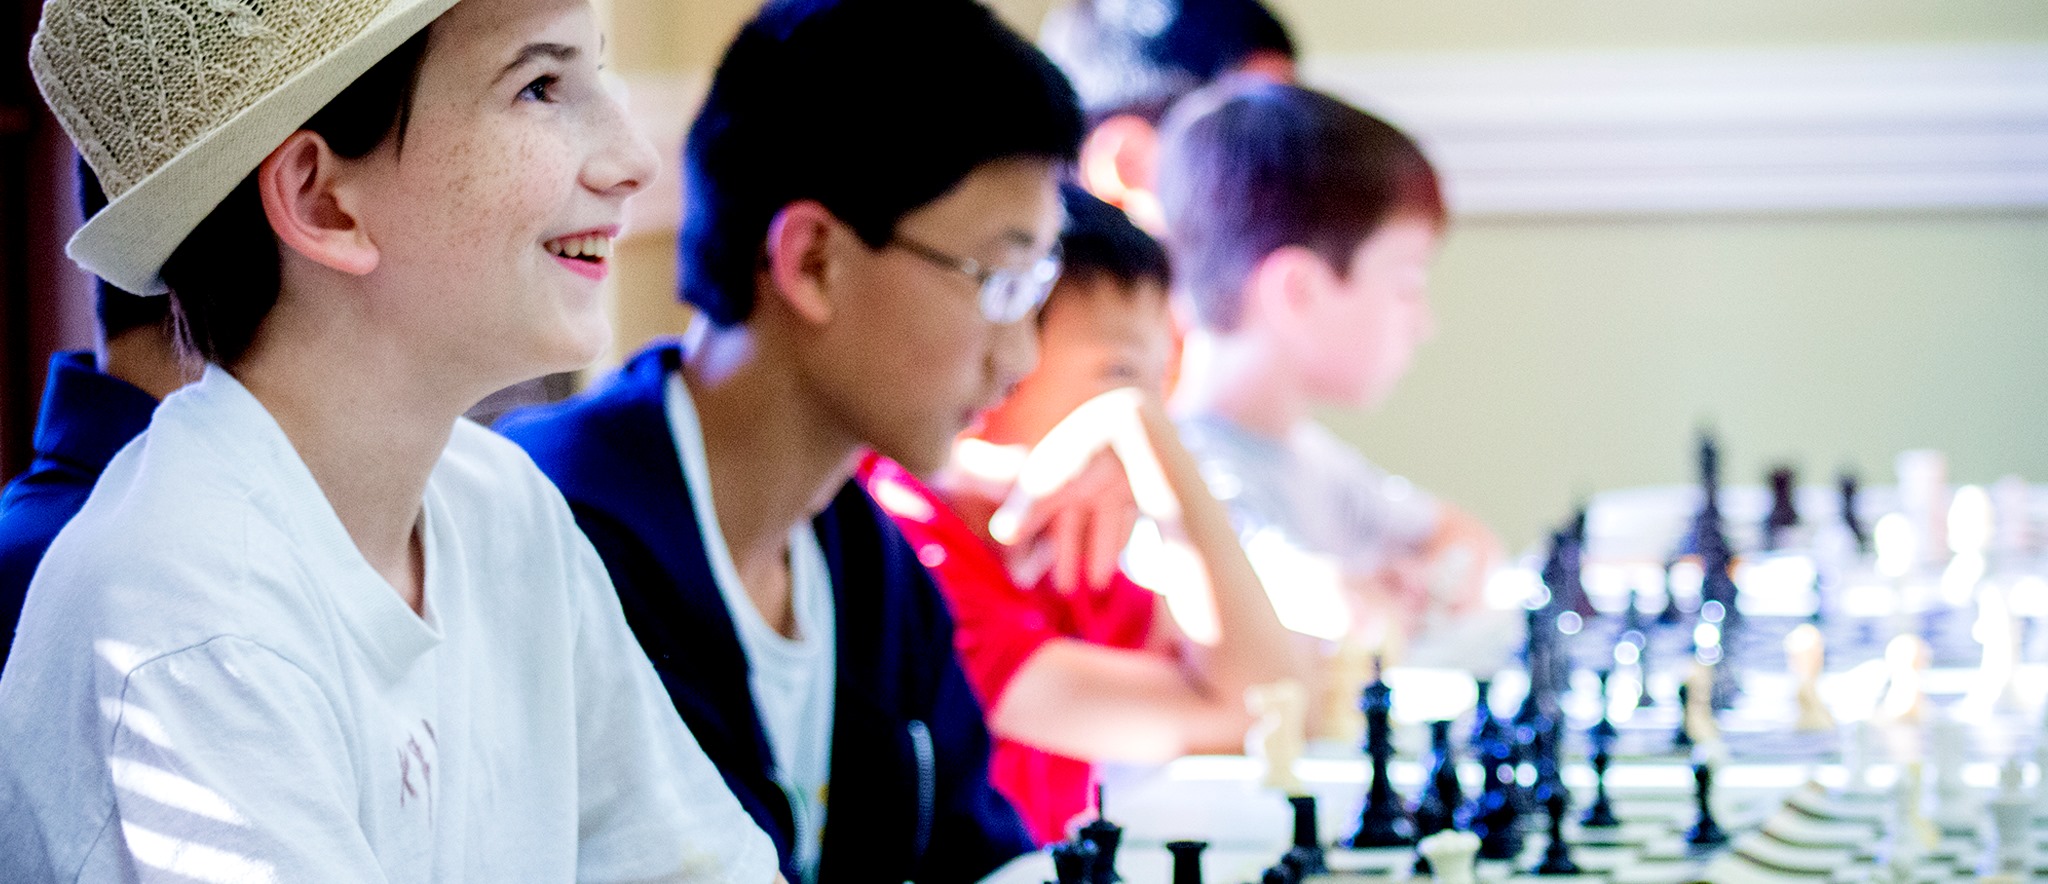 Hikaru Nakamura - Mid-South Chess